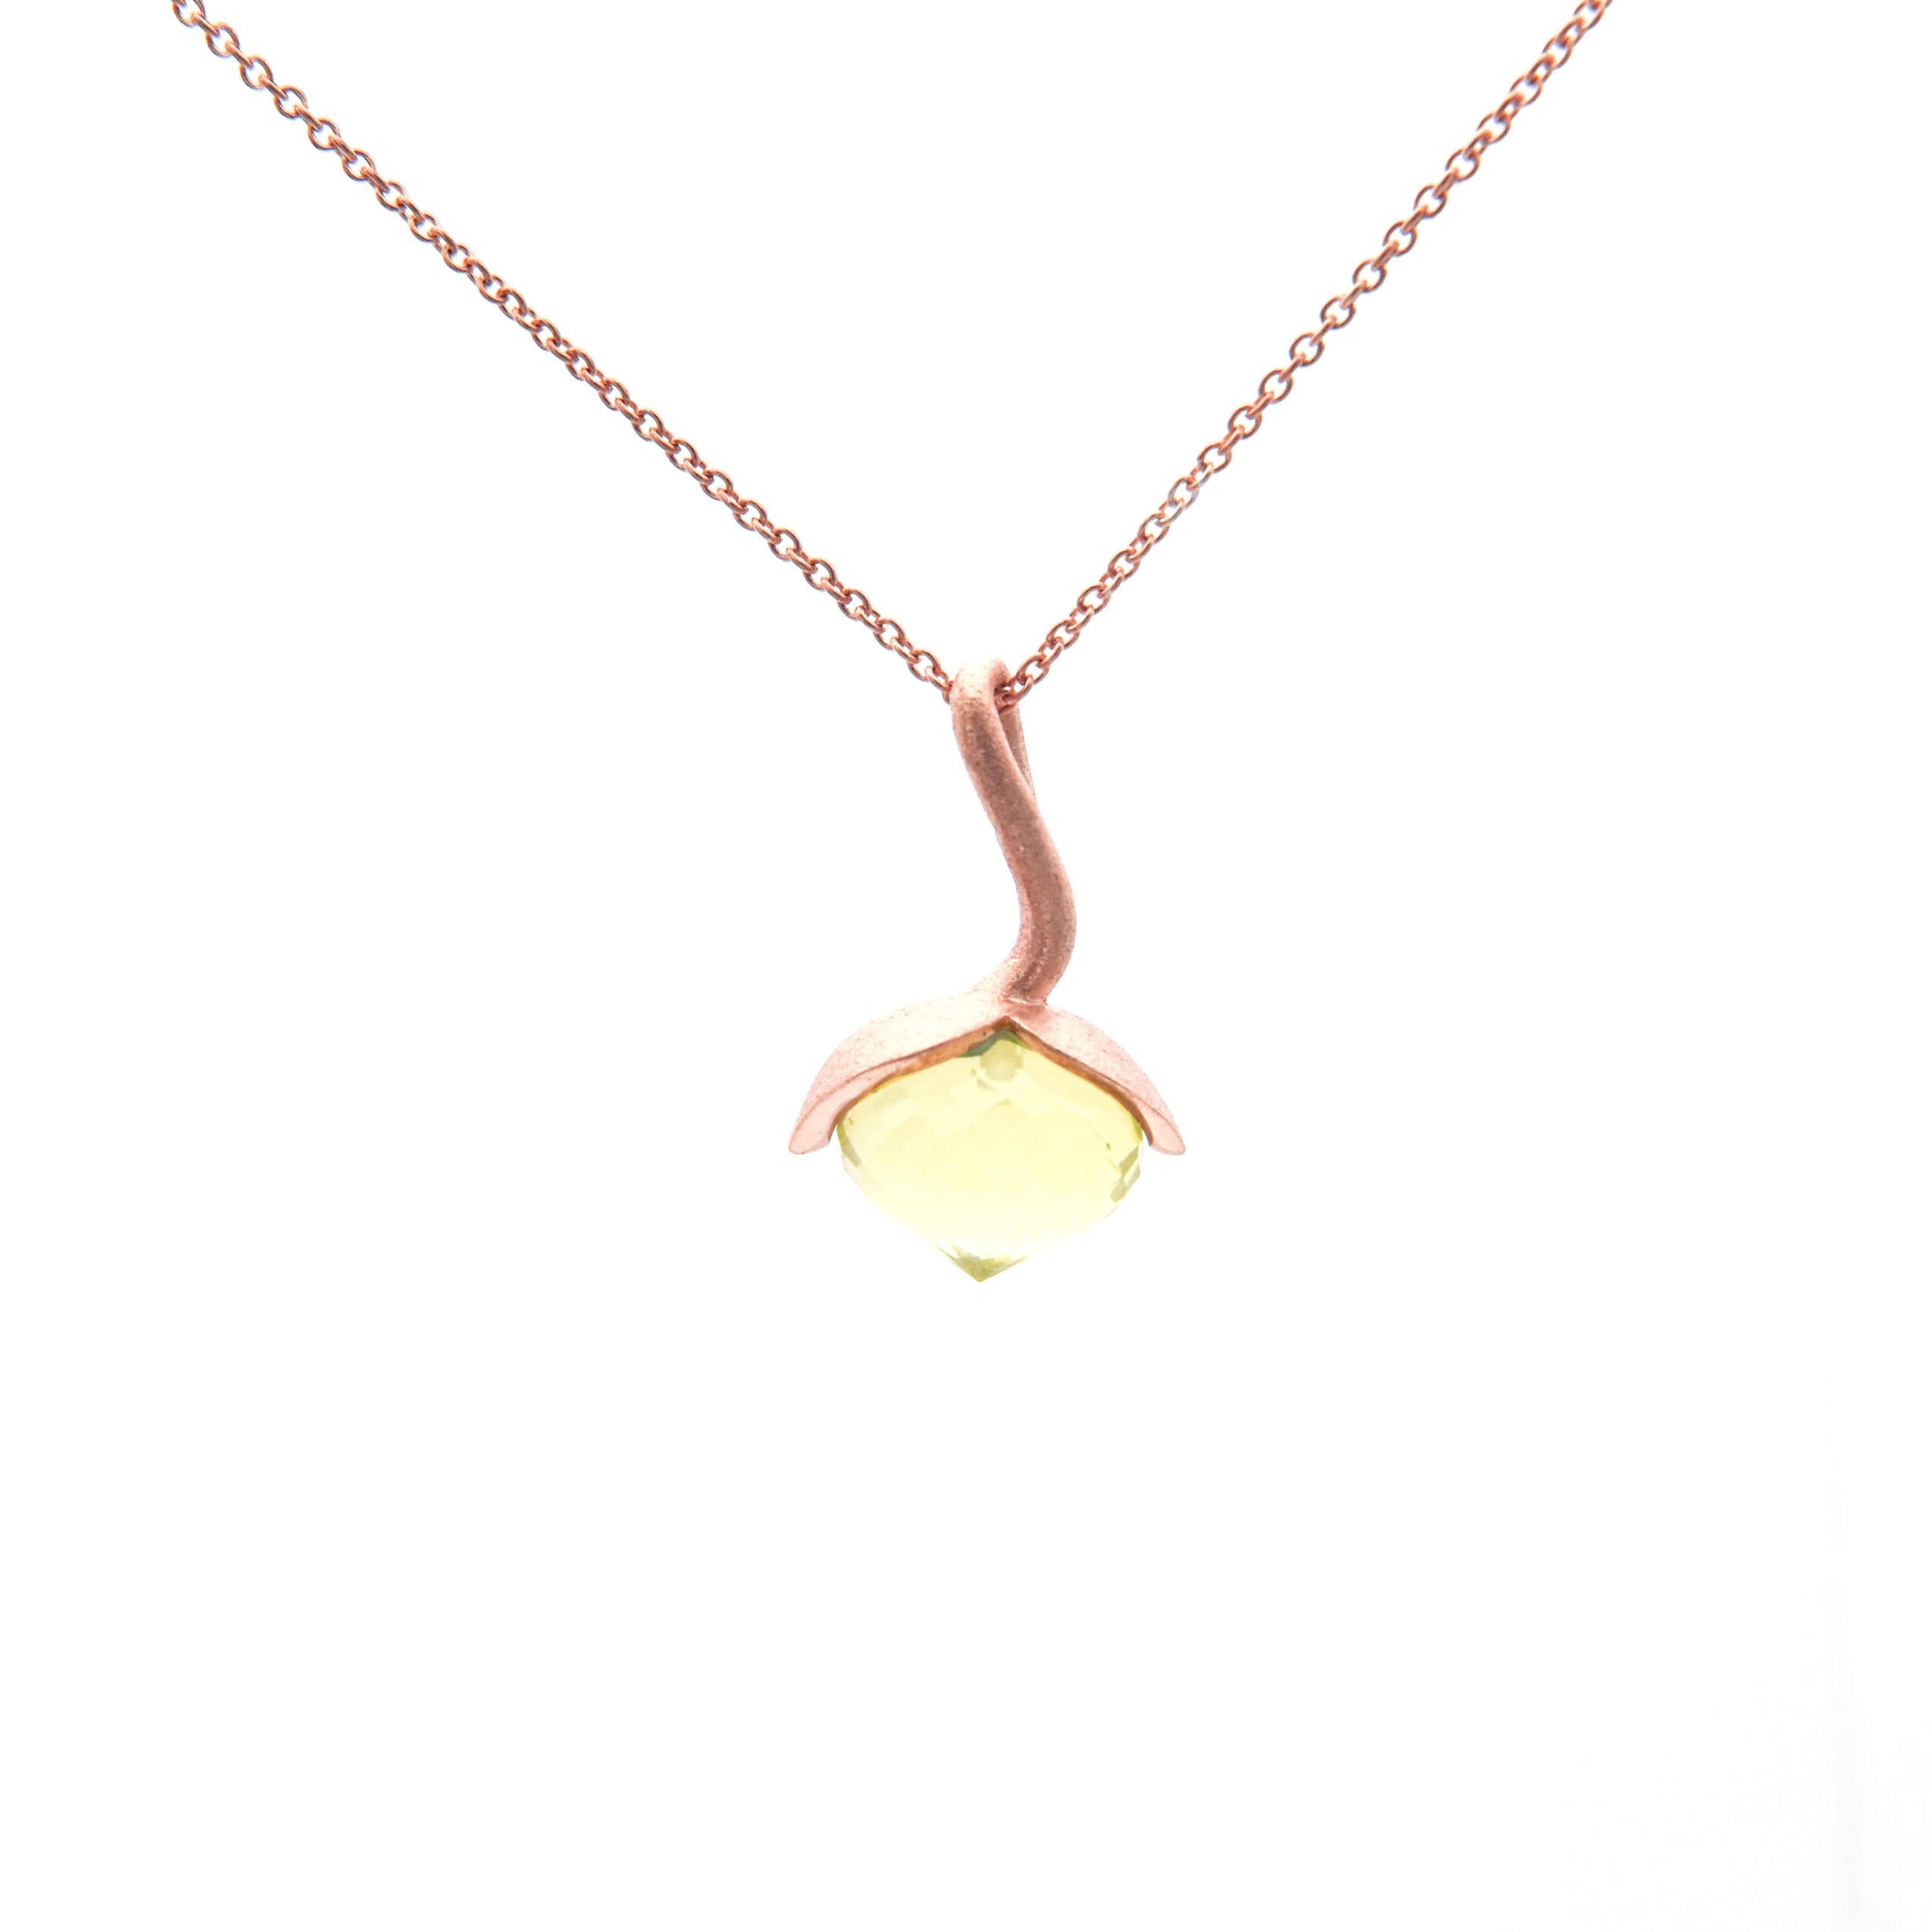 Dolce pendant "medium" with lemon quartz 925/-